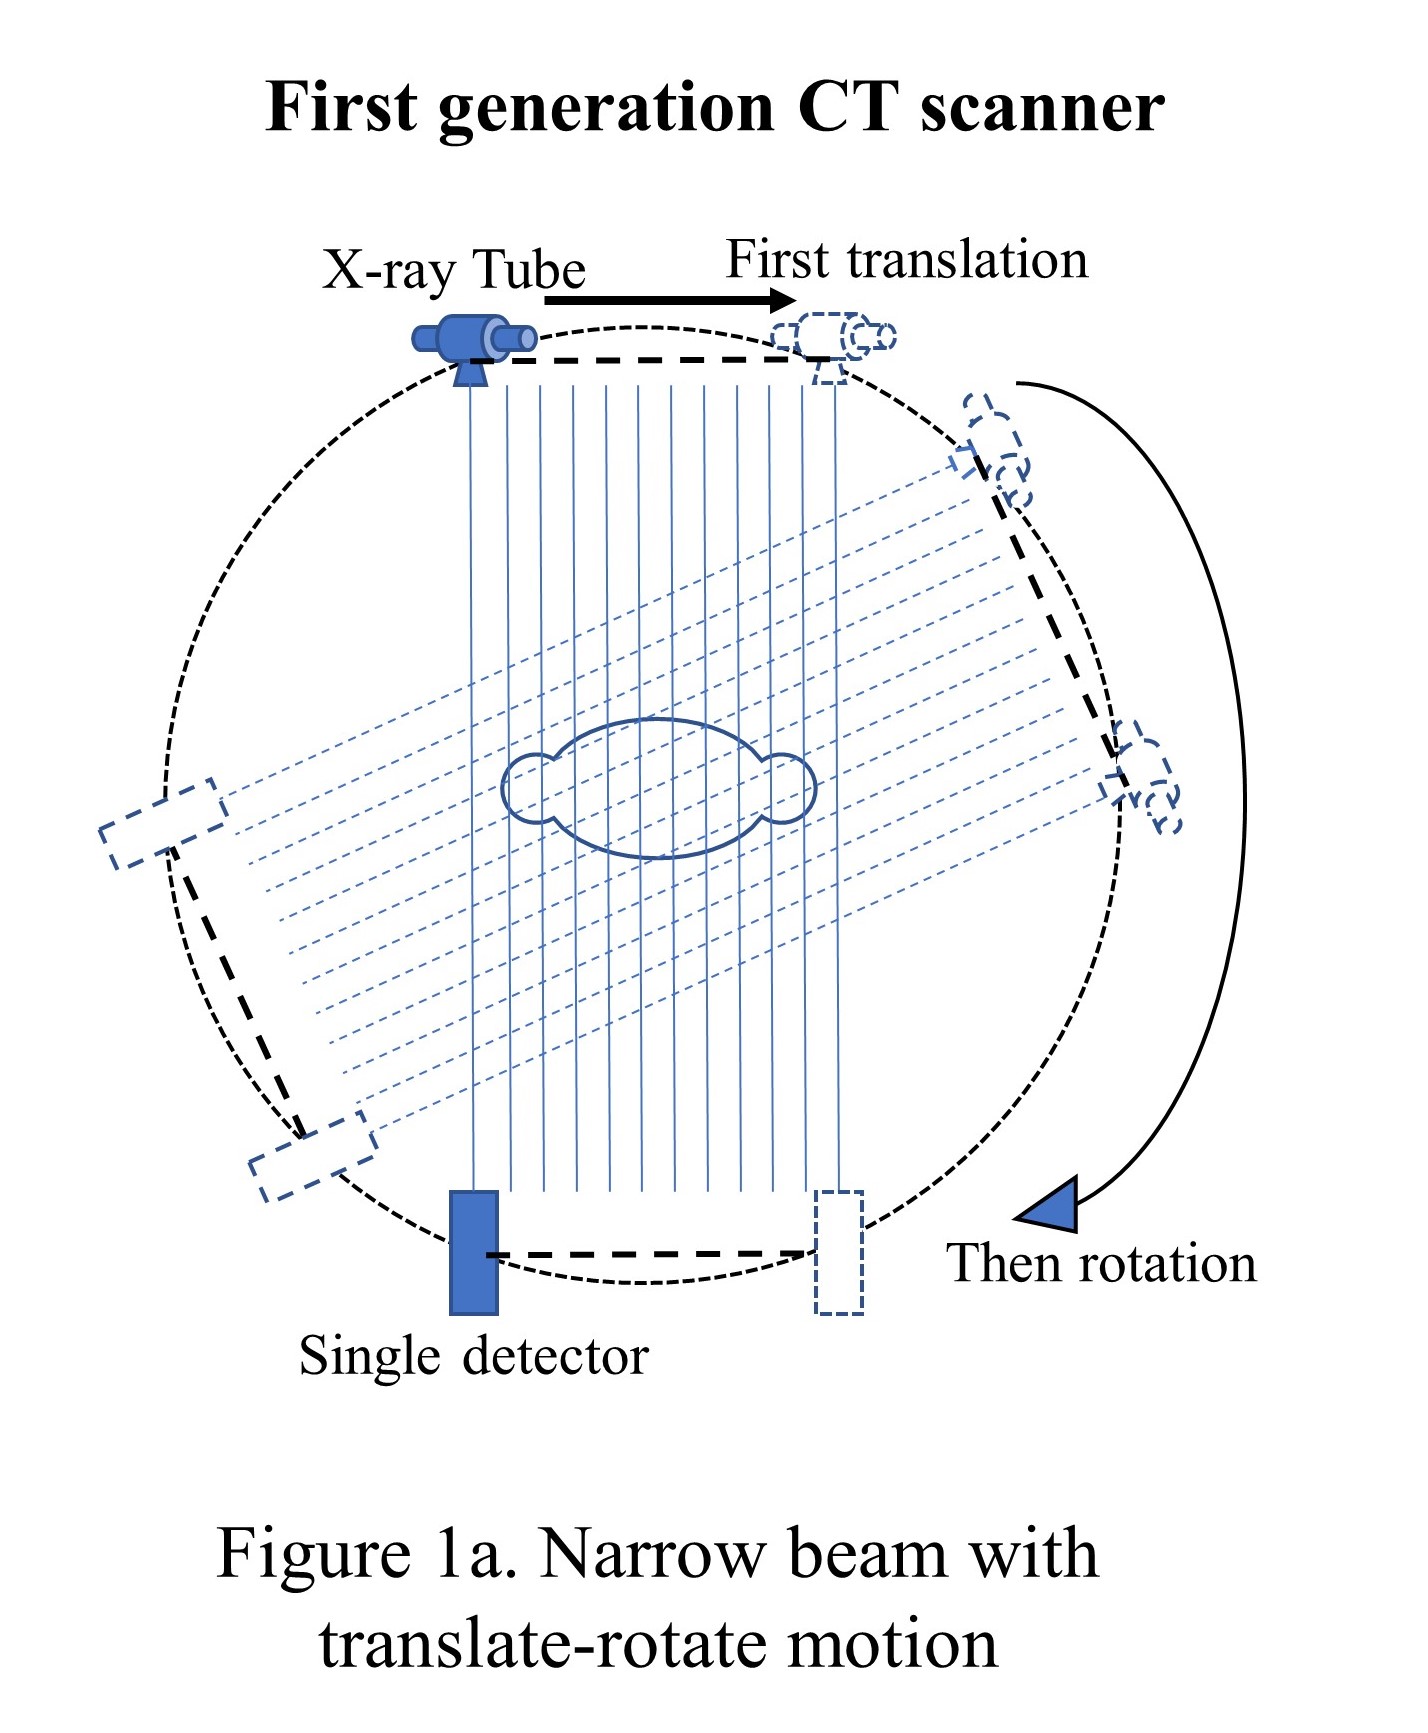 Narrow beam with translate-rotate motion